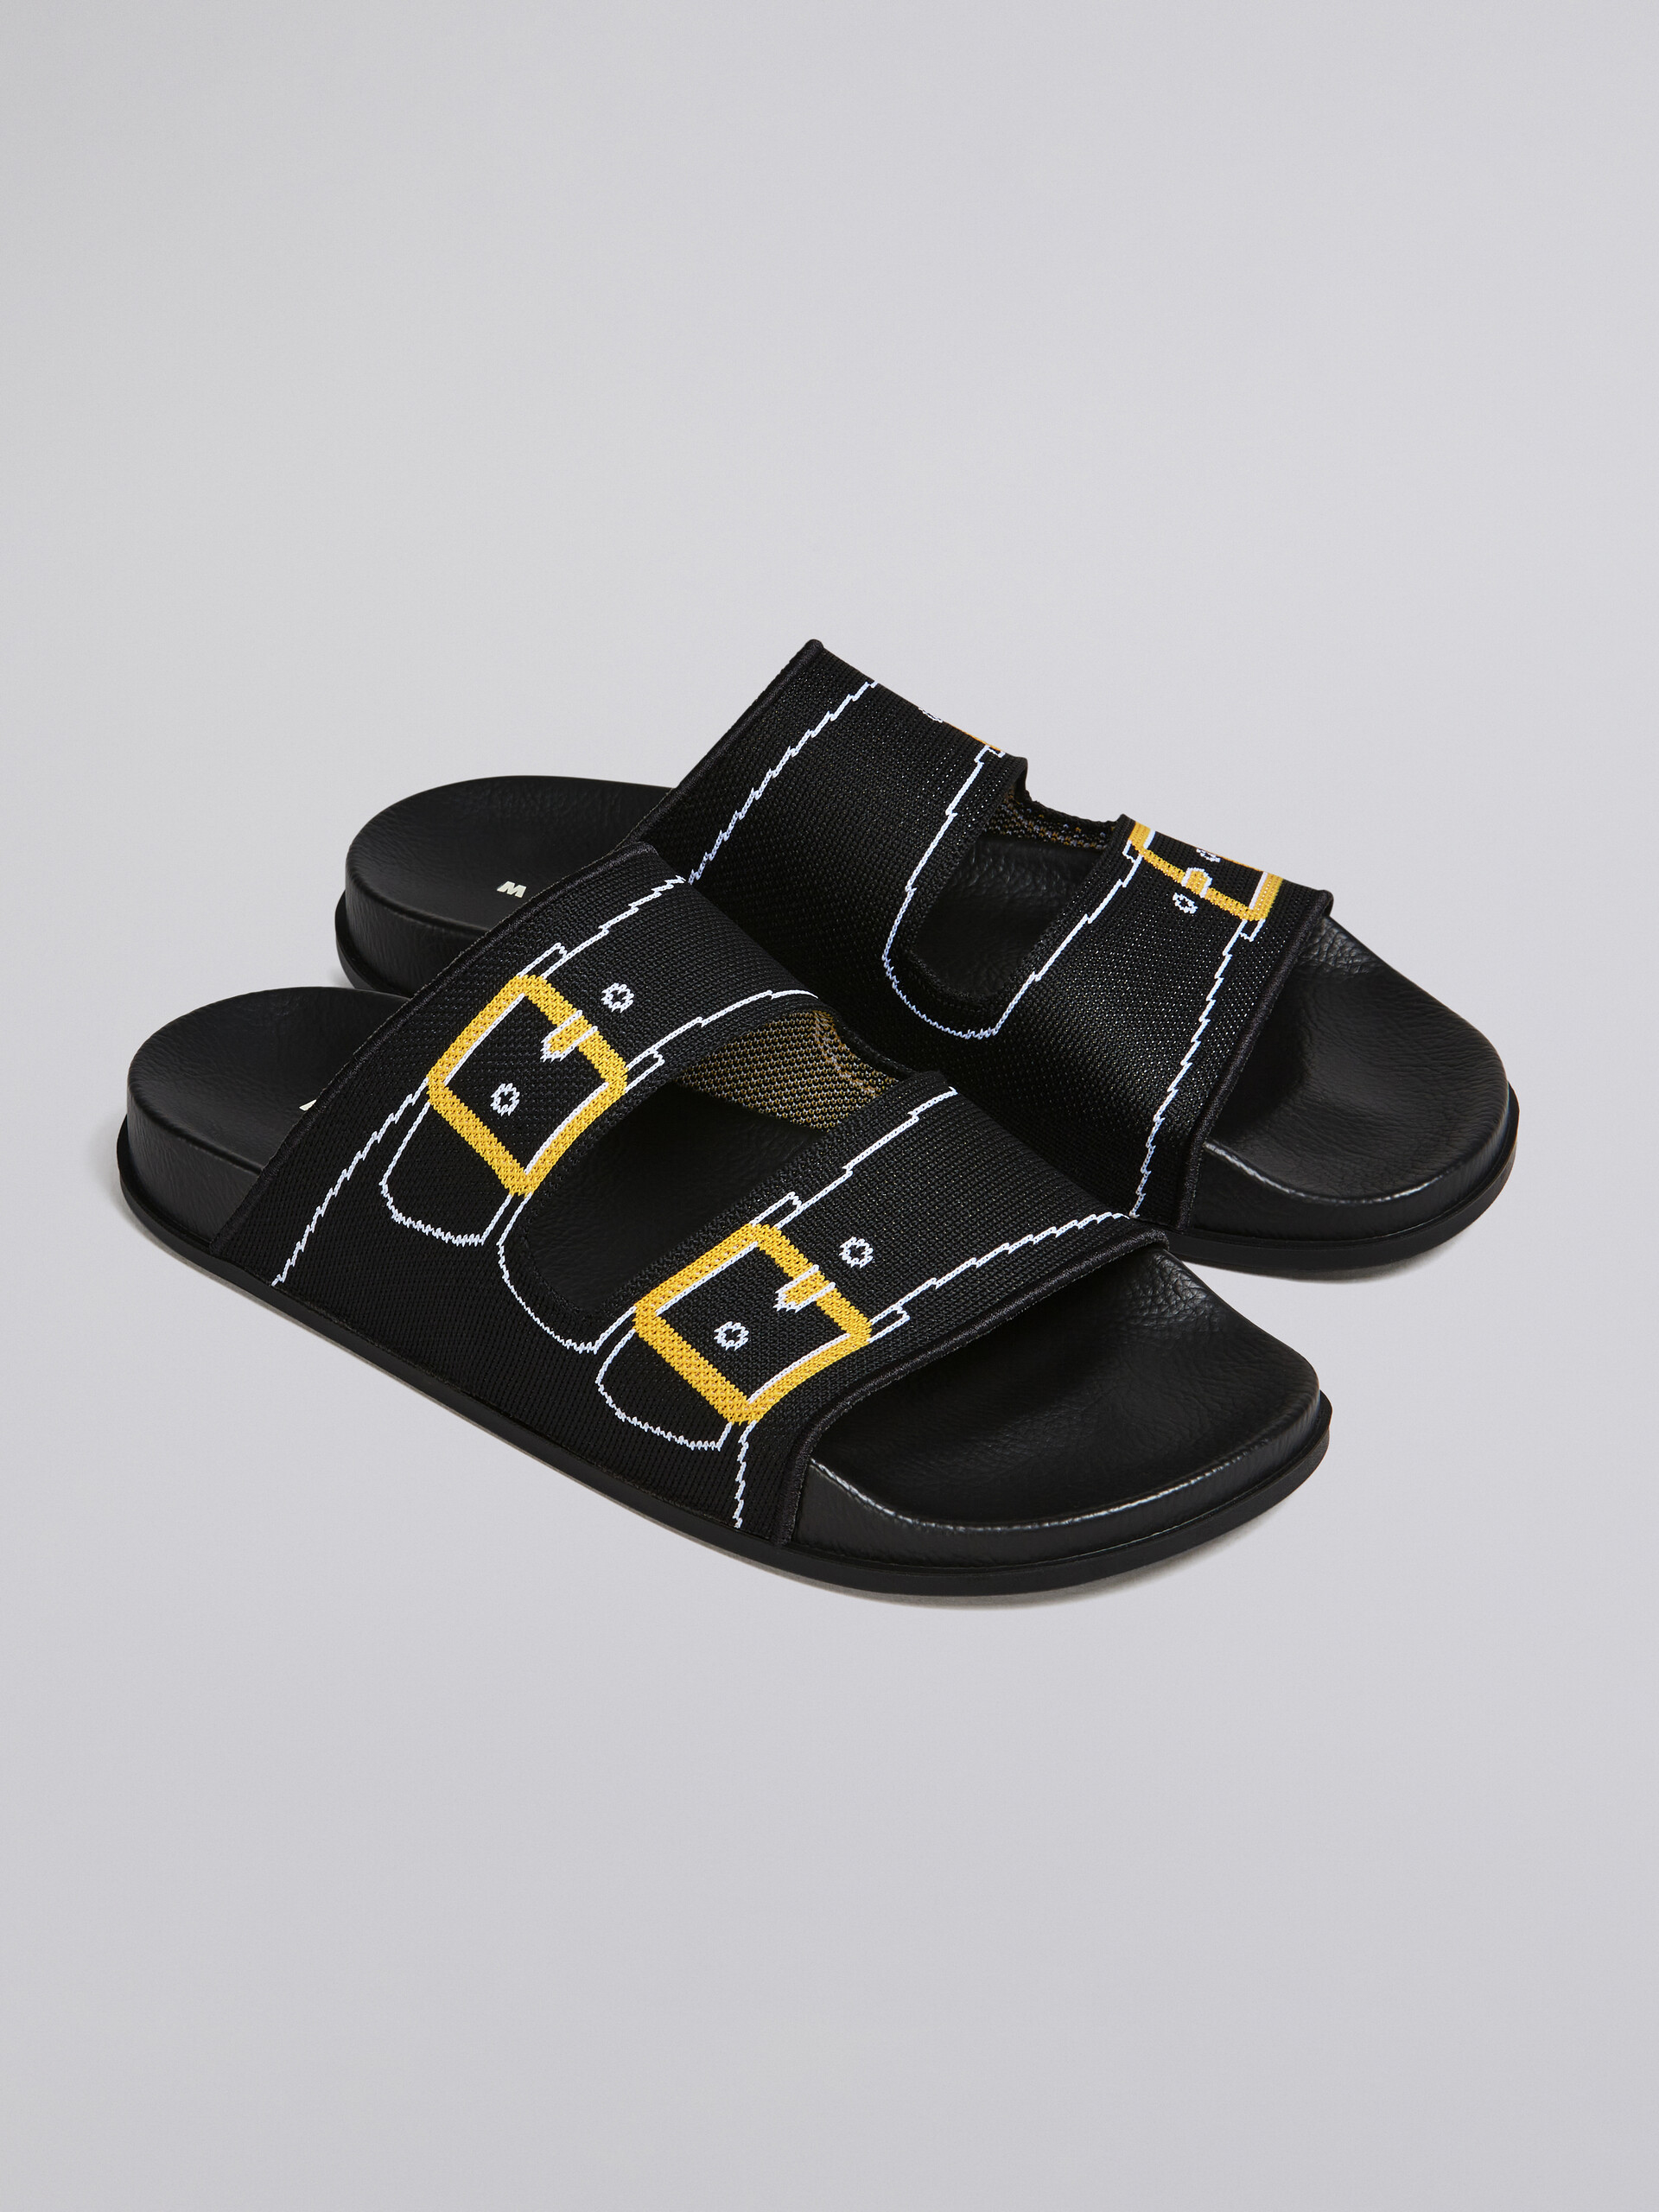 Black trompe l'œil jacquard two-strap slide - Sandals - Image 5